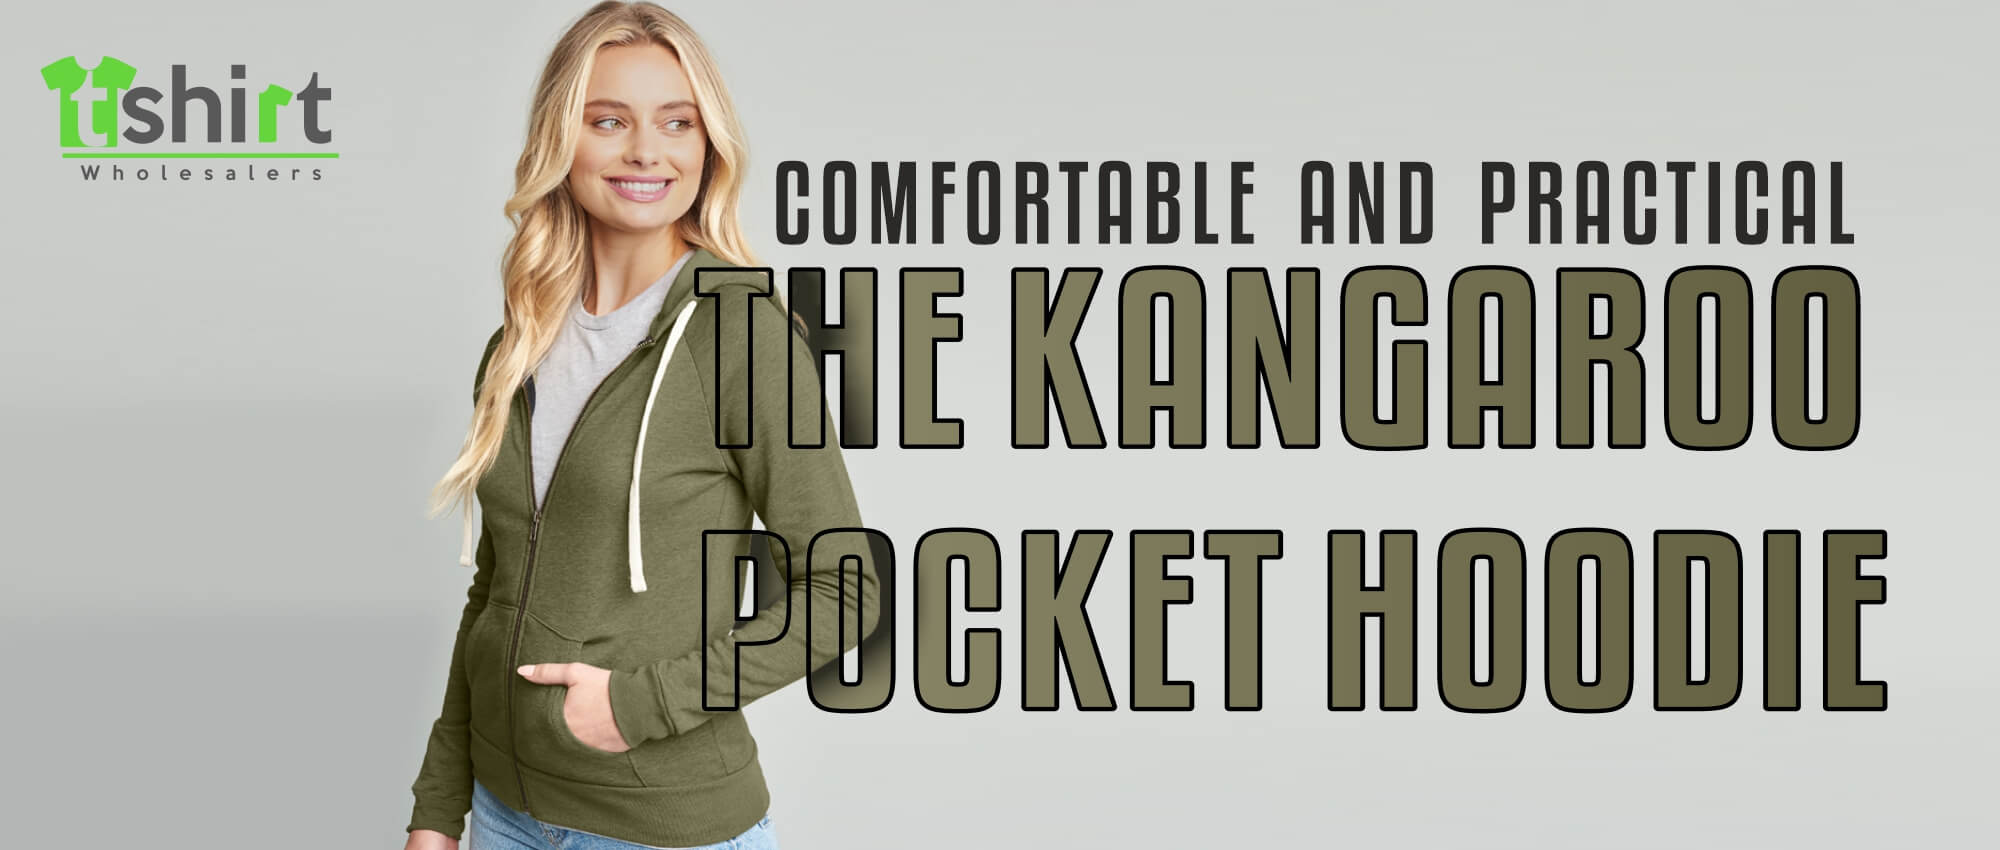 COMFORTABLE AND PRACTICAL- THE KANGAROO POCKET HOODIE